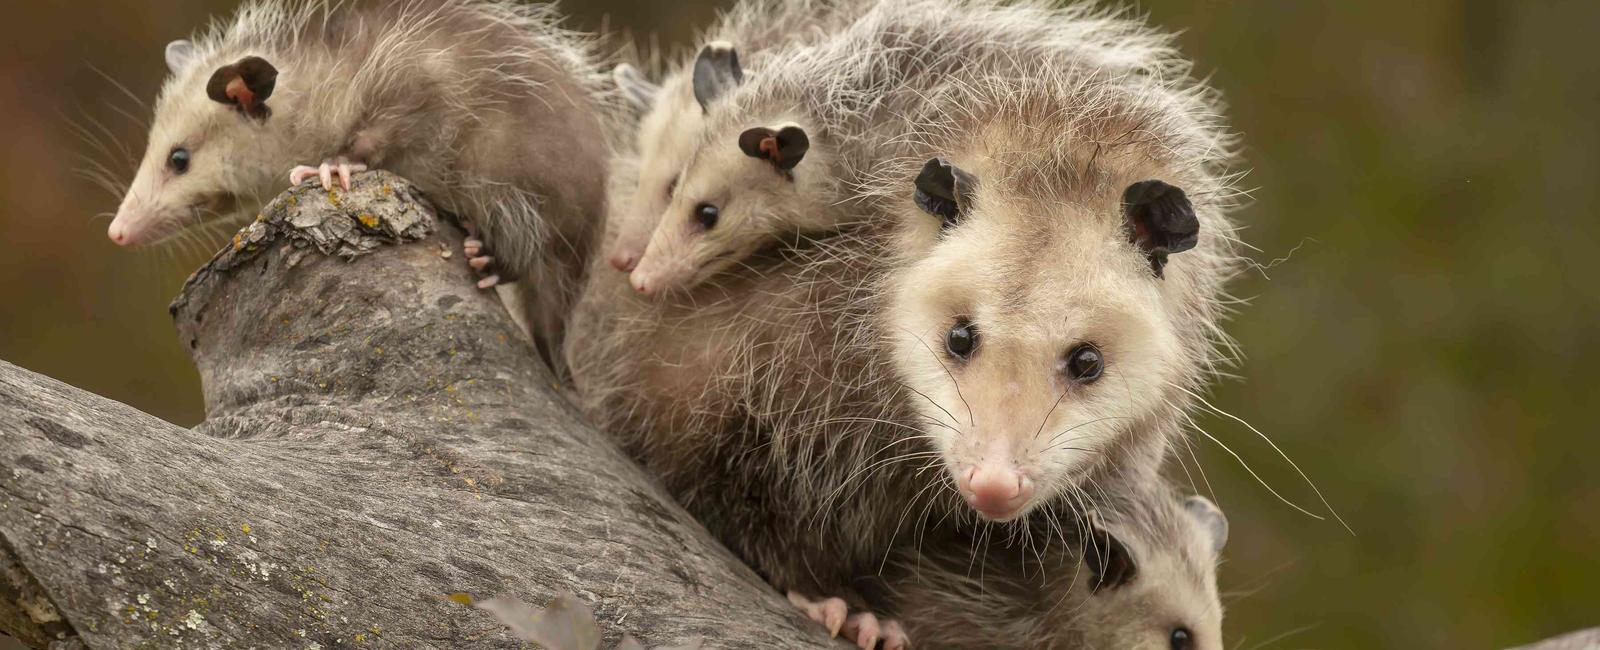 The female opossum has 13 nipples